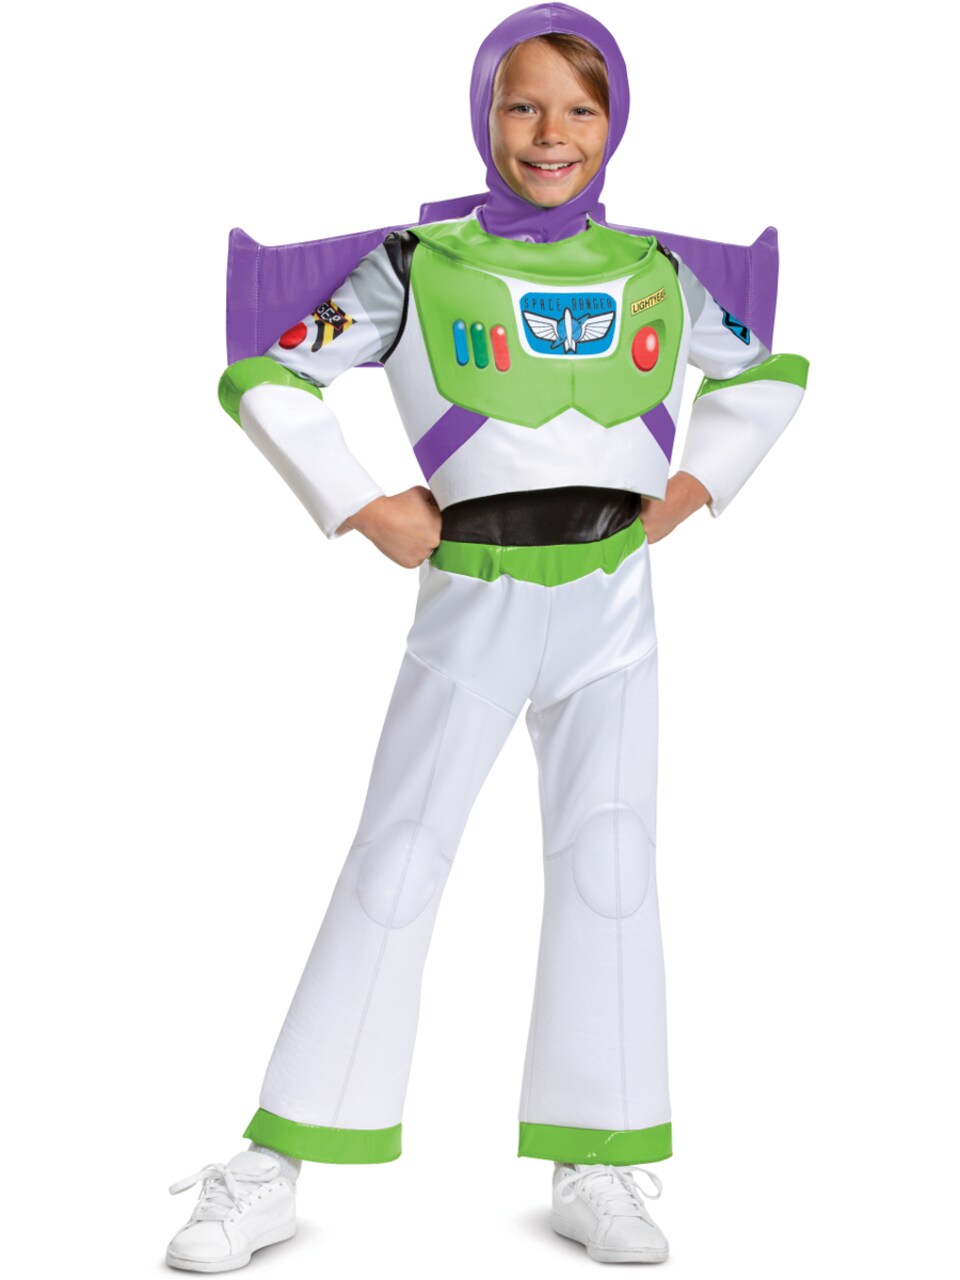 Child's Disney Deluxe Toy Story 4 Buzz Lightyear Costume